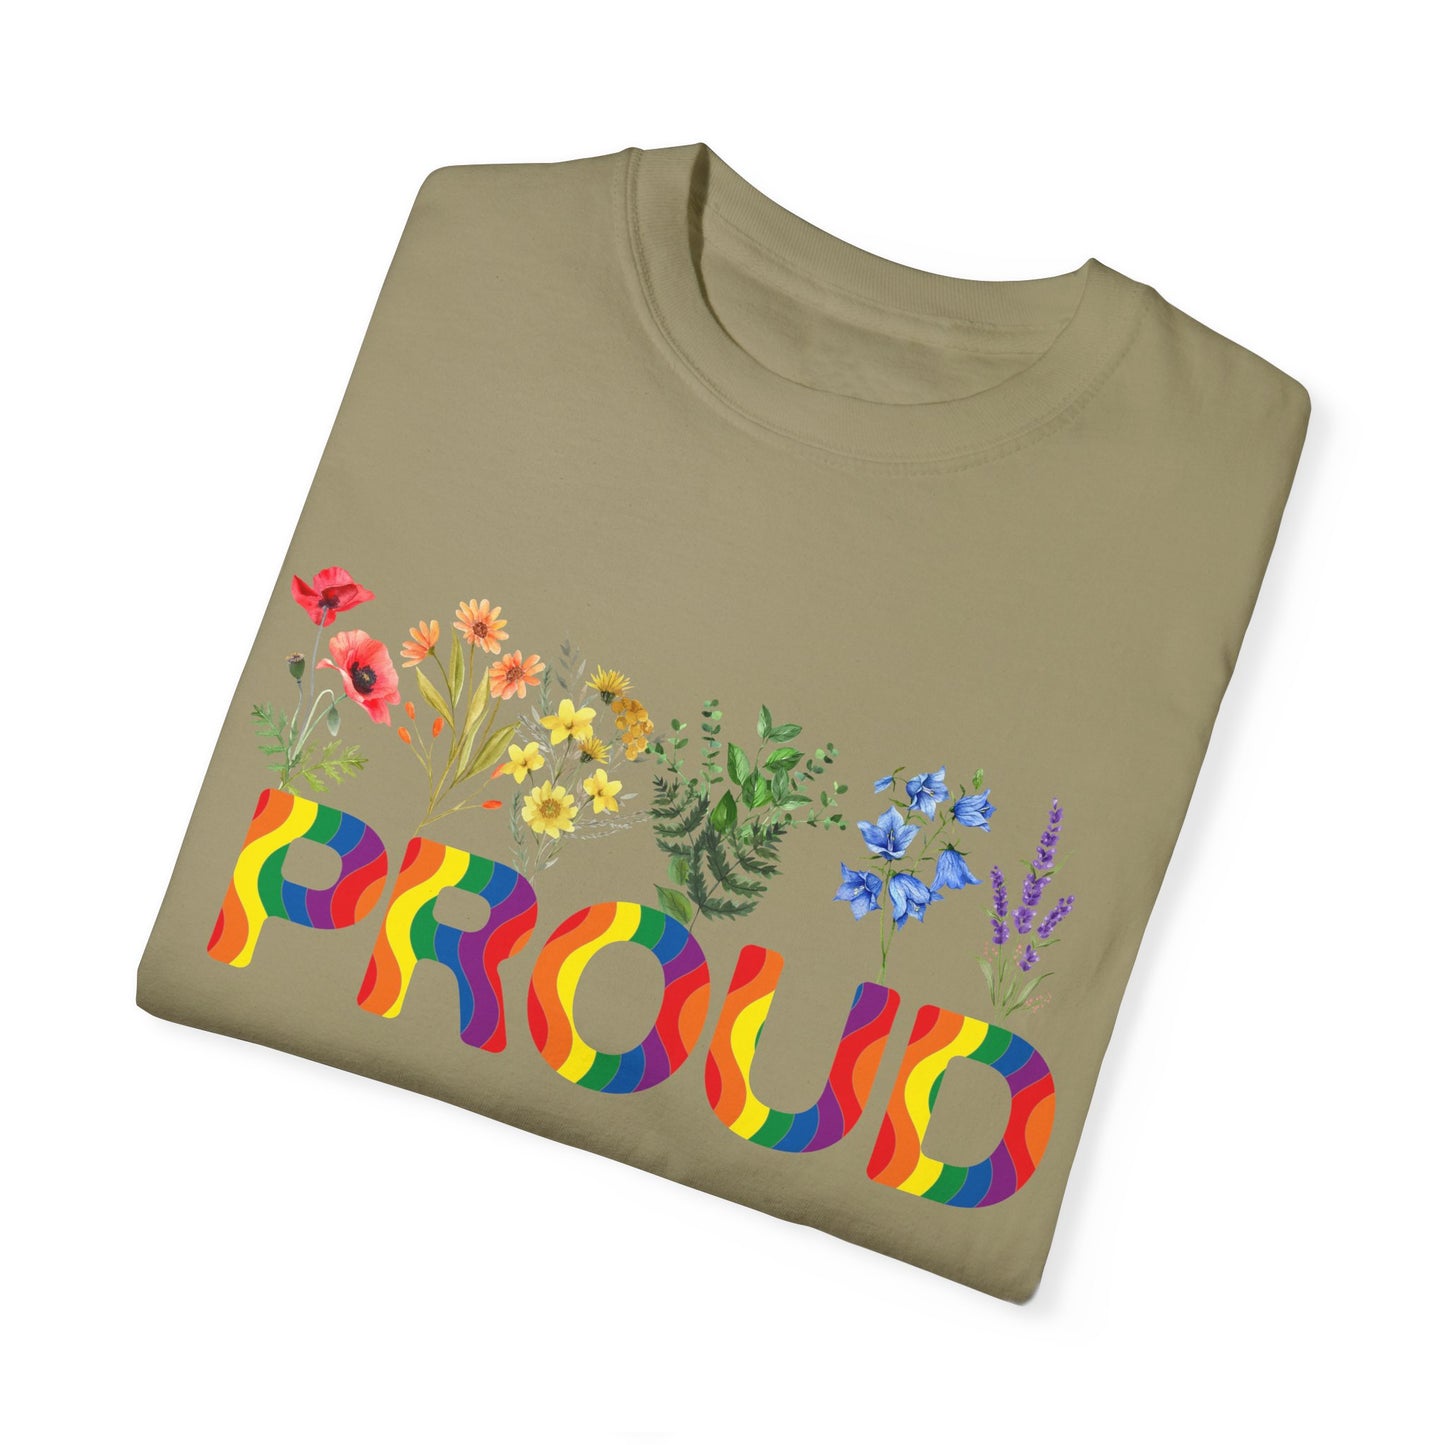 Pride Flowers Shirt, LGBTQIA+ Pride Shirt, Pride Month Shirt, Gay Rights Gift, Equality Shirt, LGBTQIA Supporter Shirt, Proud Shirt, CC1617